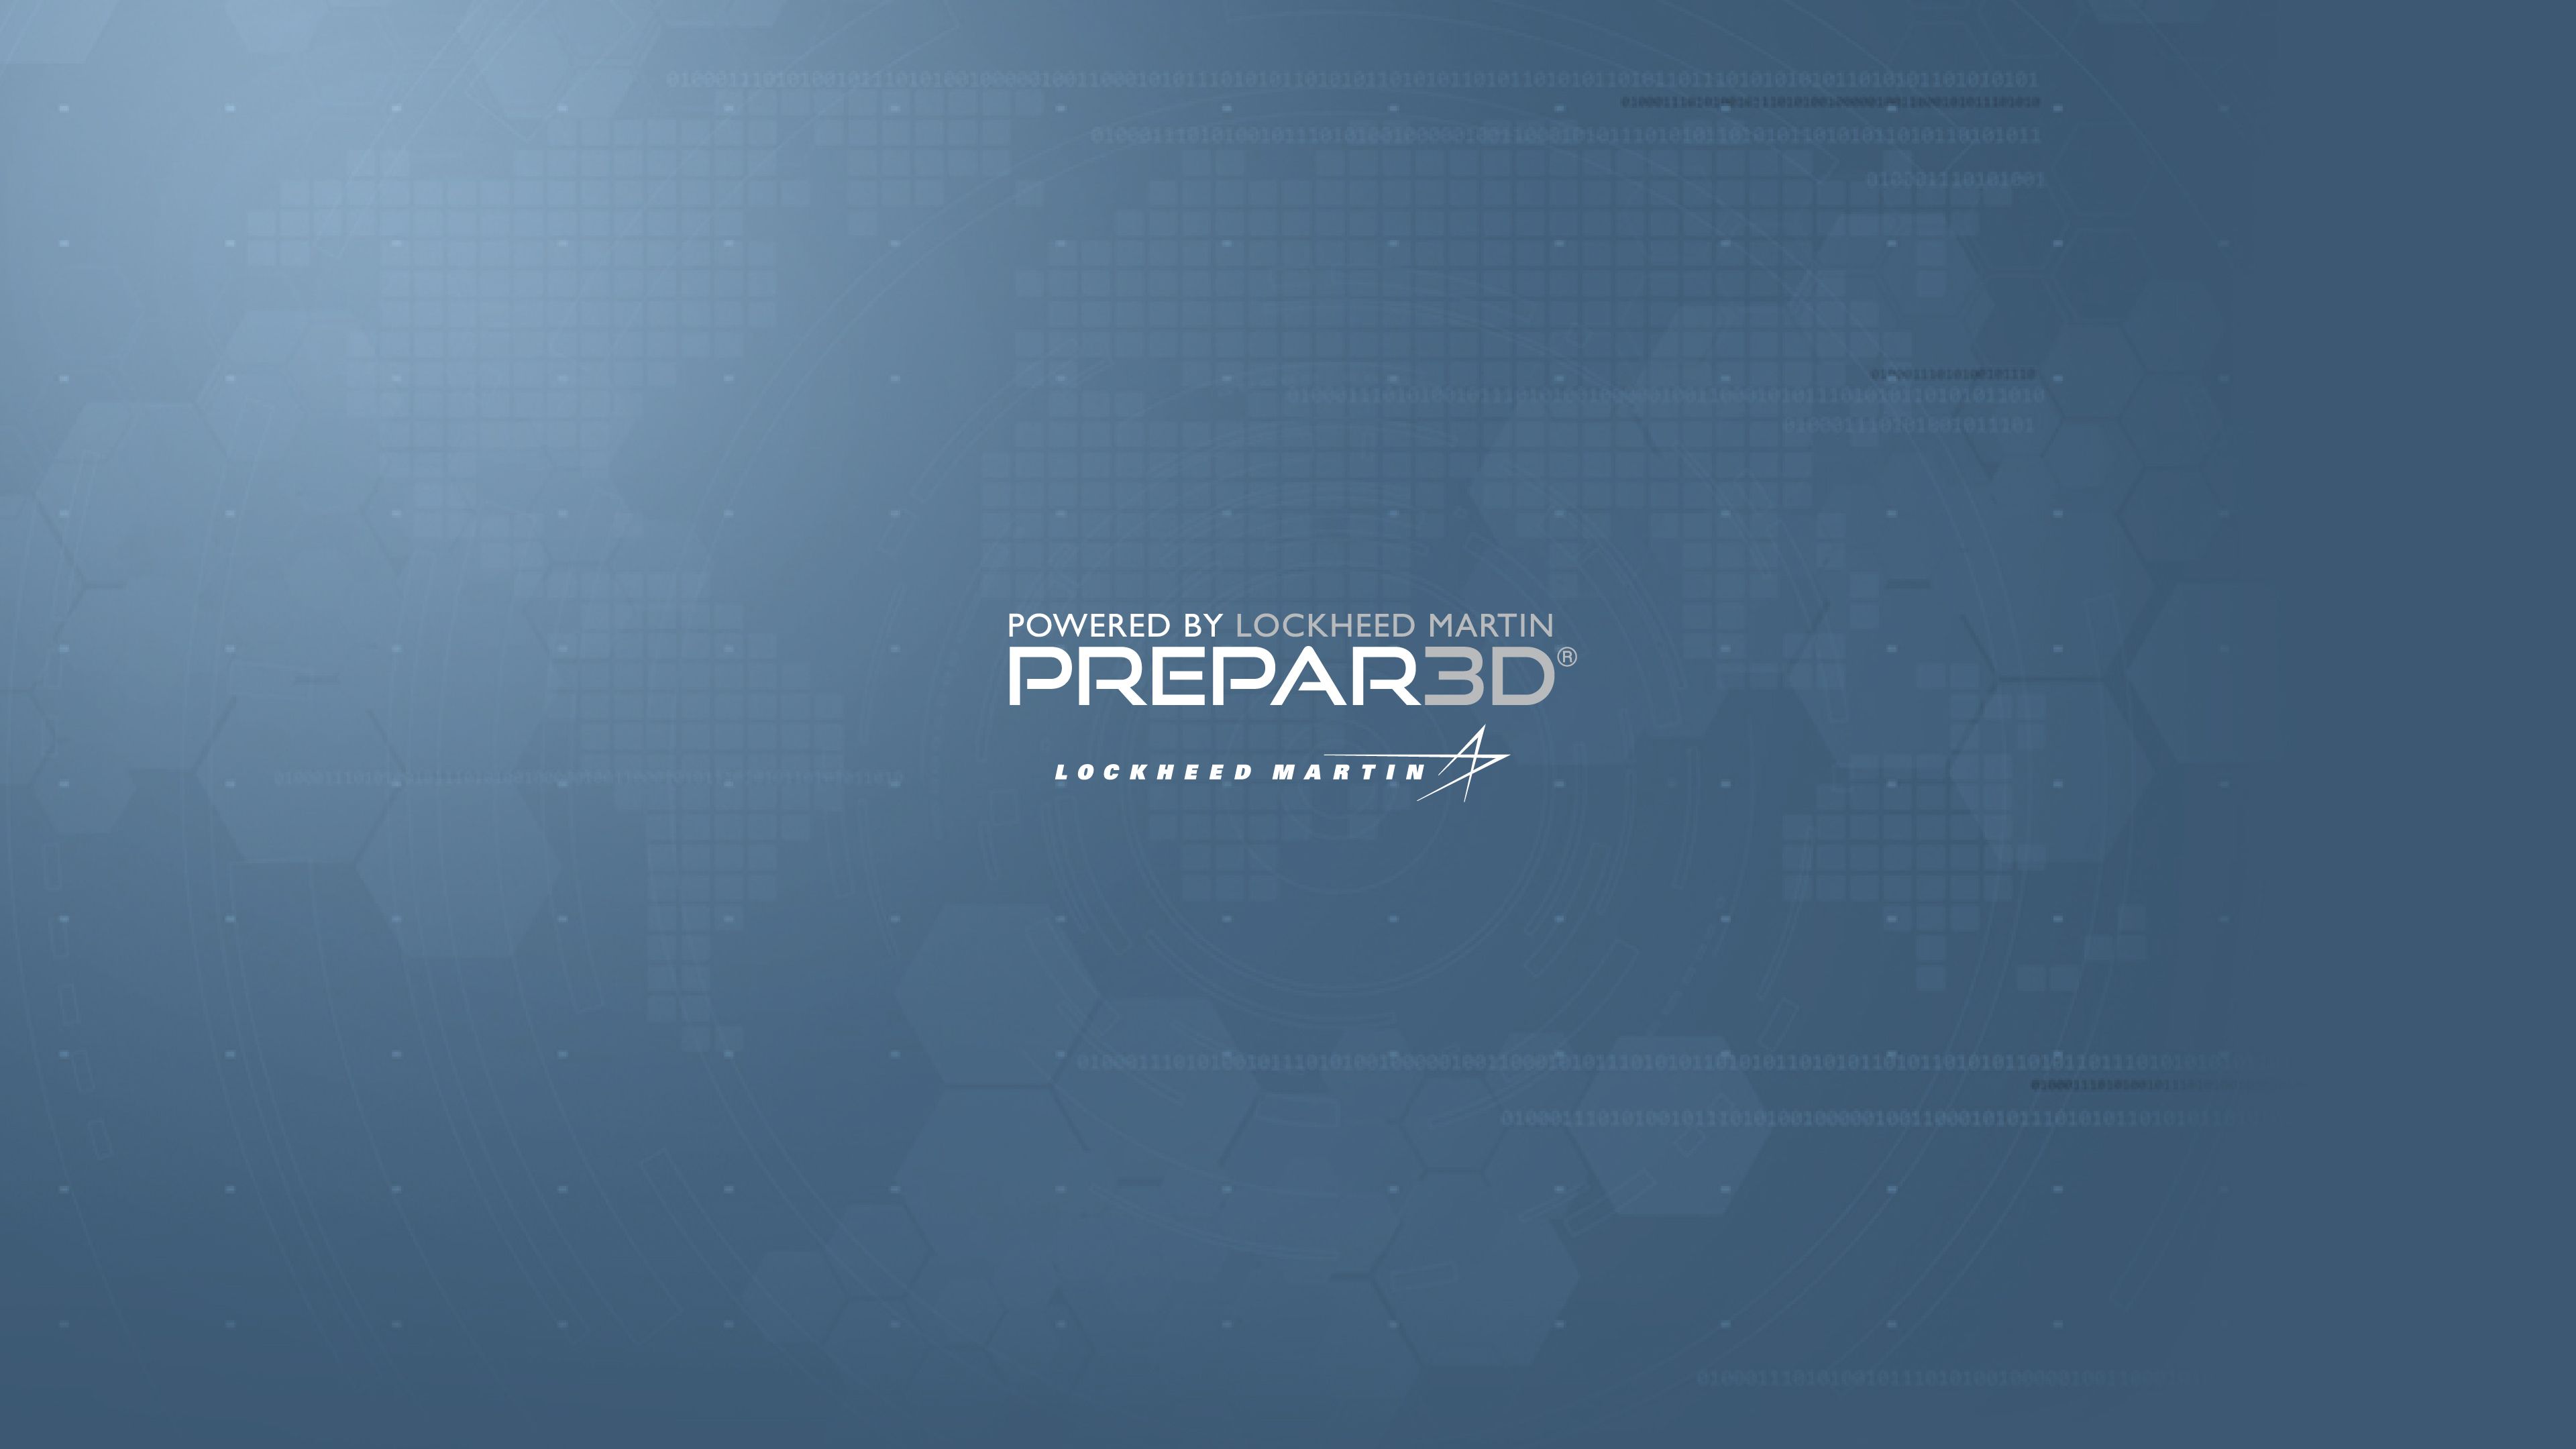 Show your Prepar3D support with custom Prepar3D wallpaper